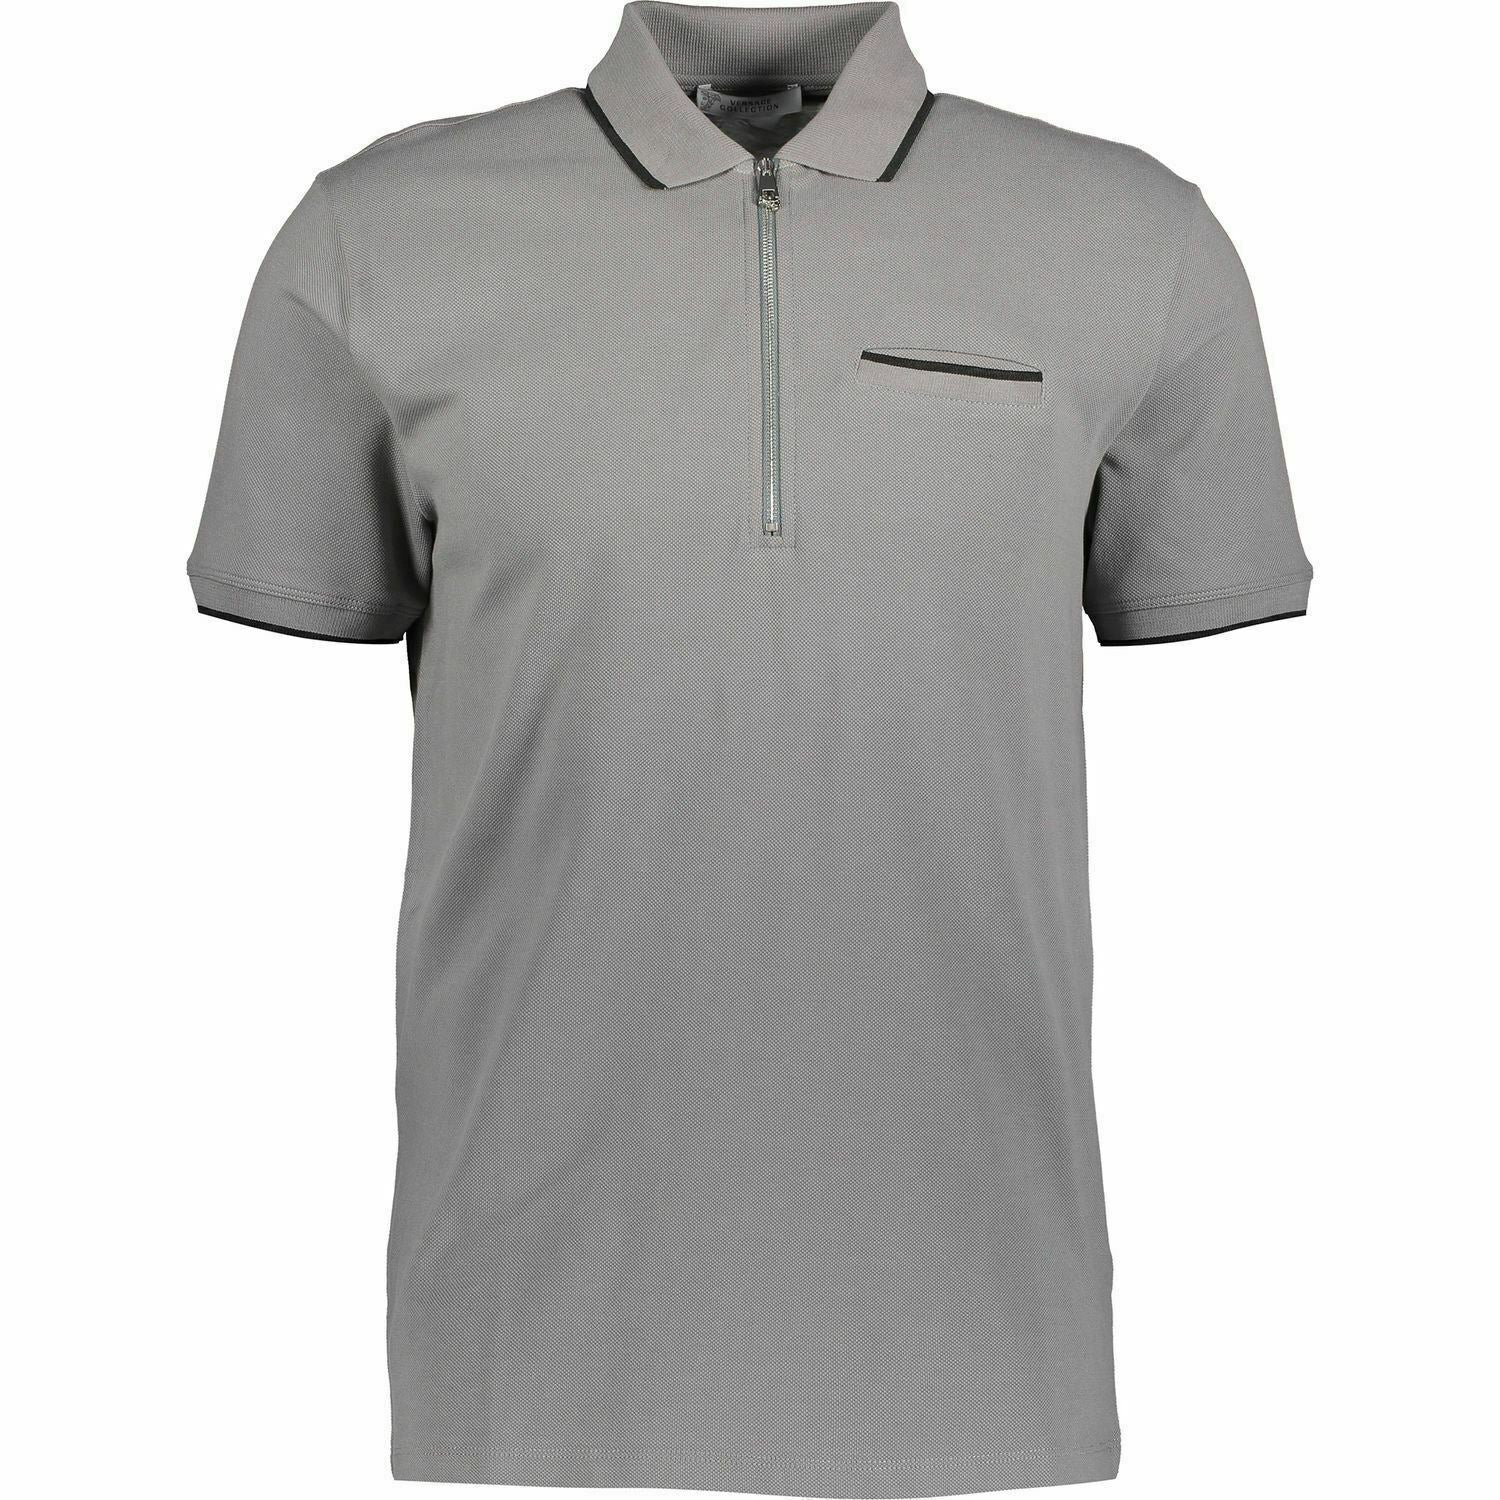 VERSACE COLLECTION Men's Grey Pique Zipped Polo Shirt, size S size M